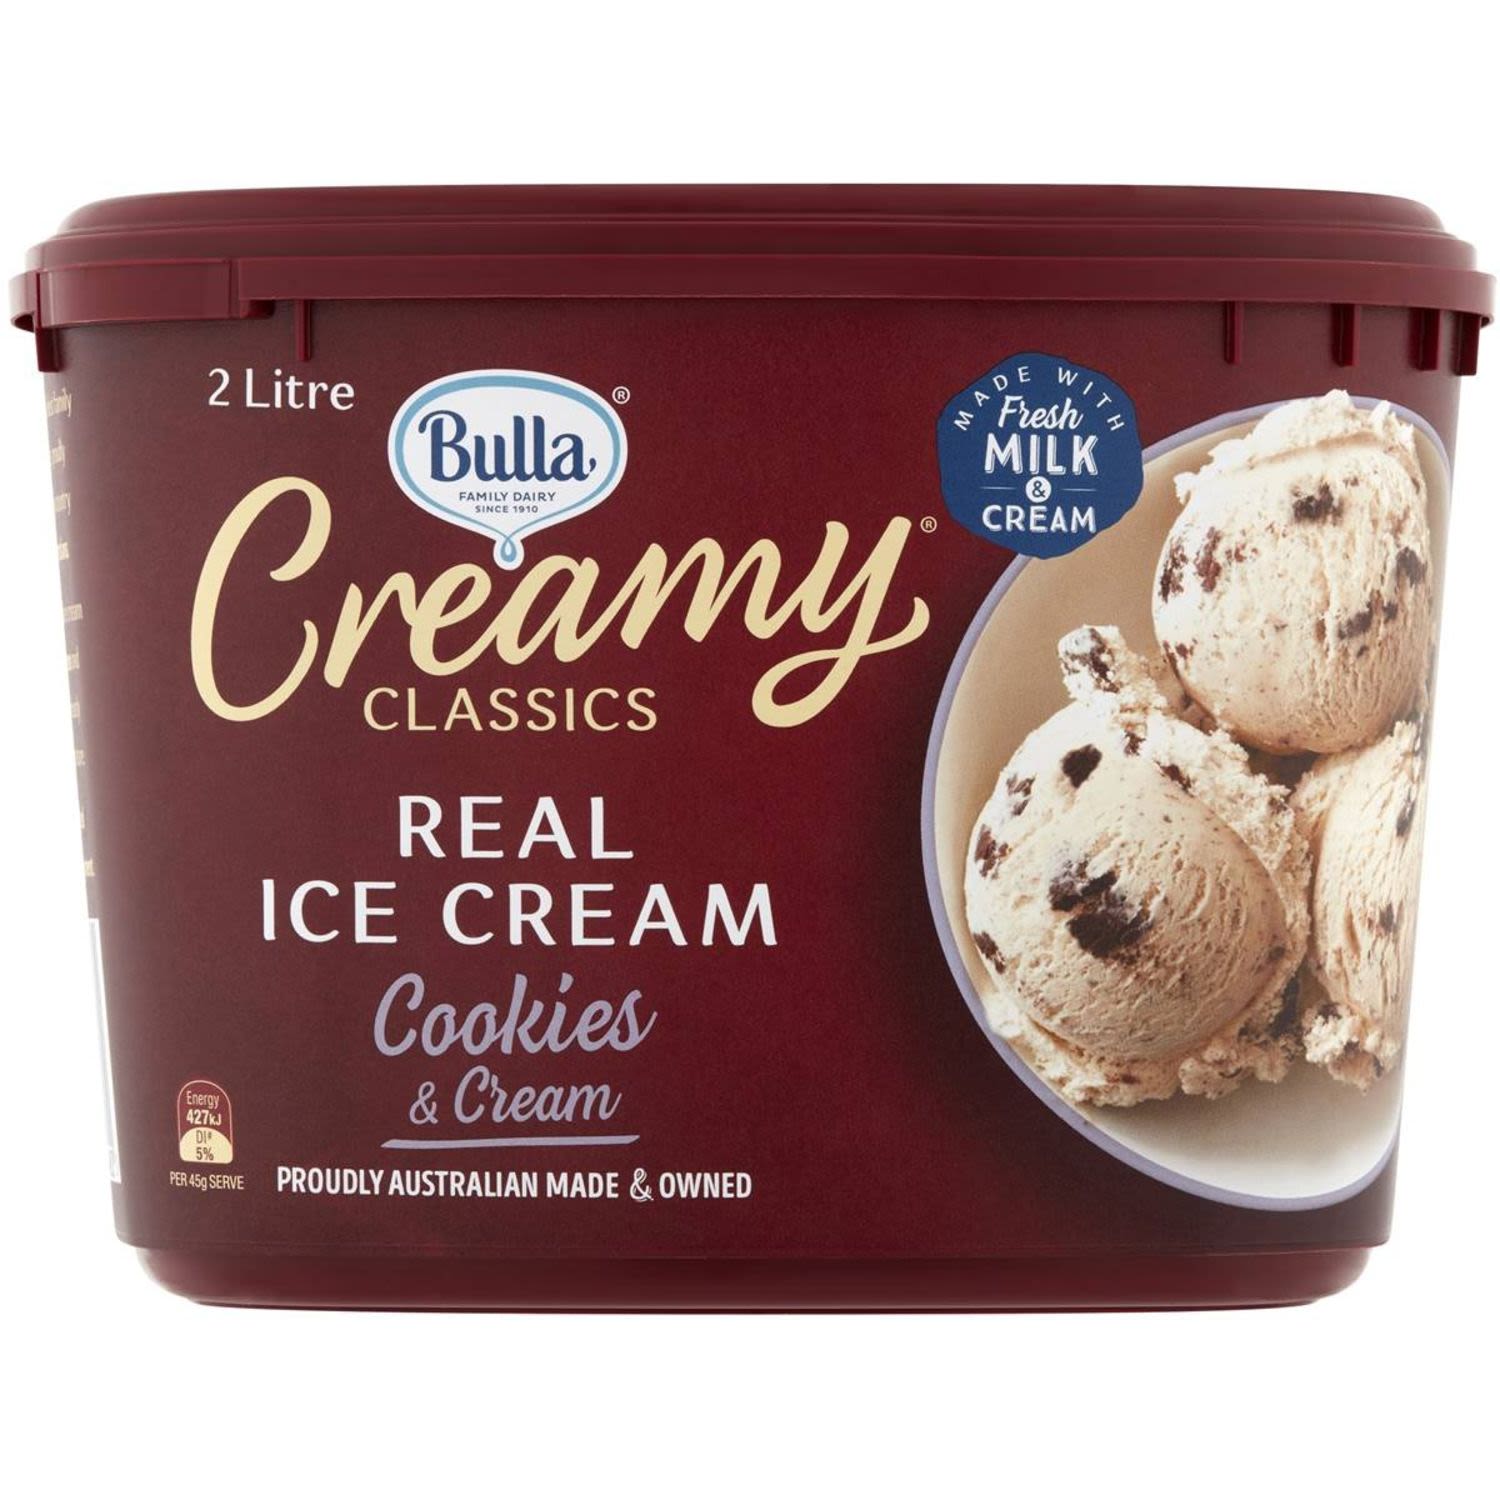 Bulla Creamy Classics Ice Cream Cookies & Cream Vanilla, 2 Litre